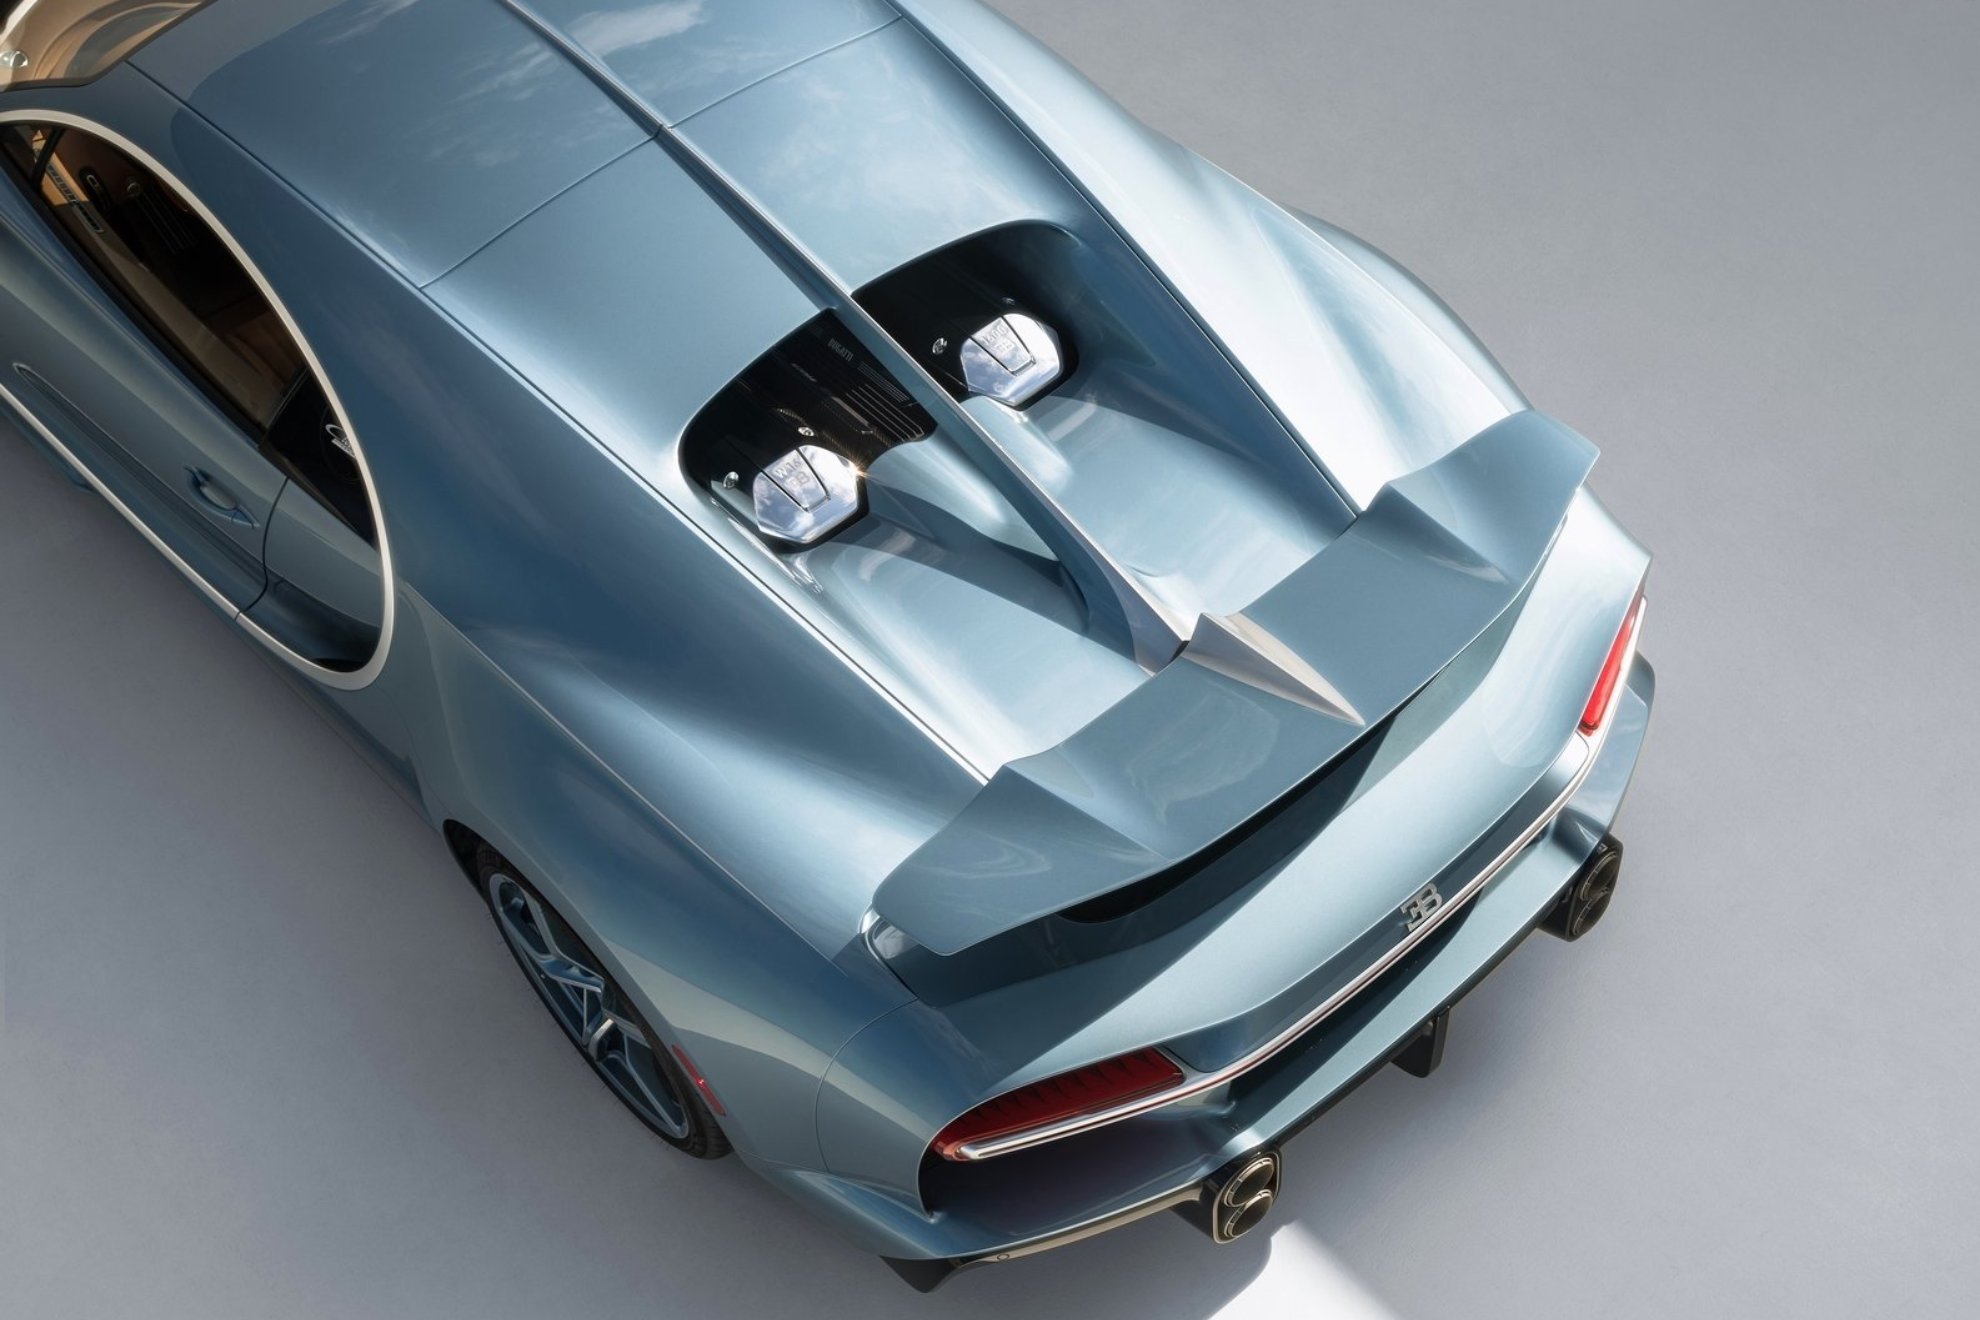 La impresionante colección de coches de Maluma: Porsche, Ferrari y Mercedes